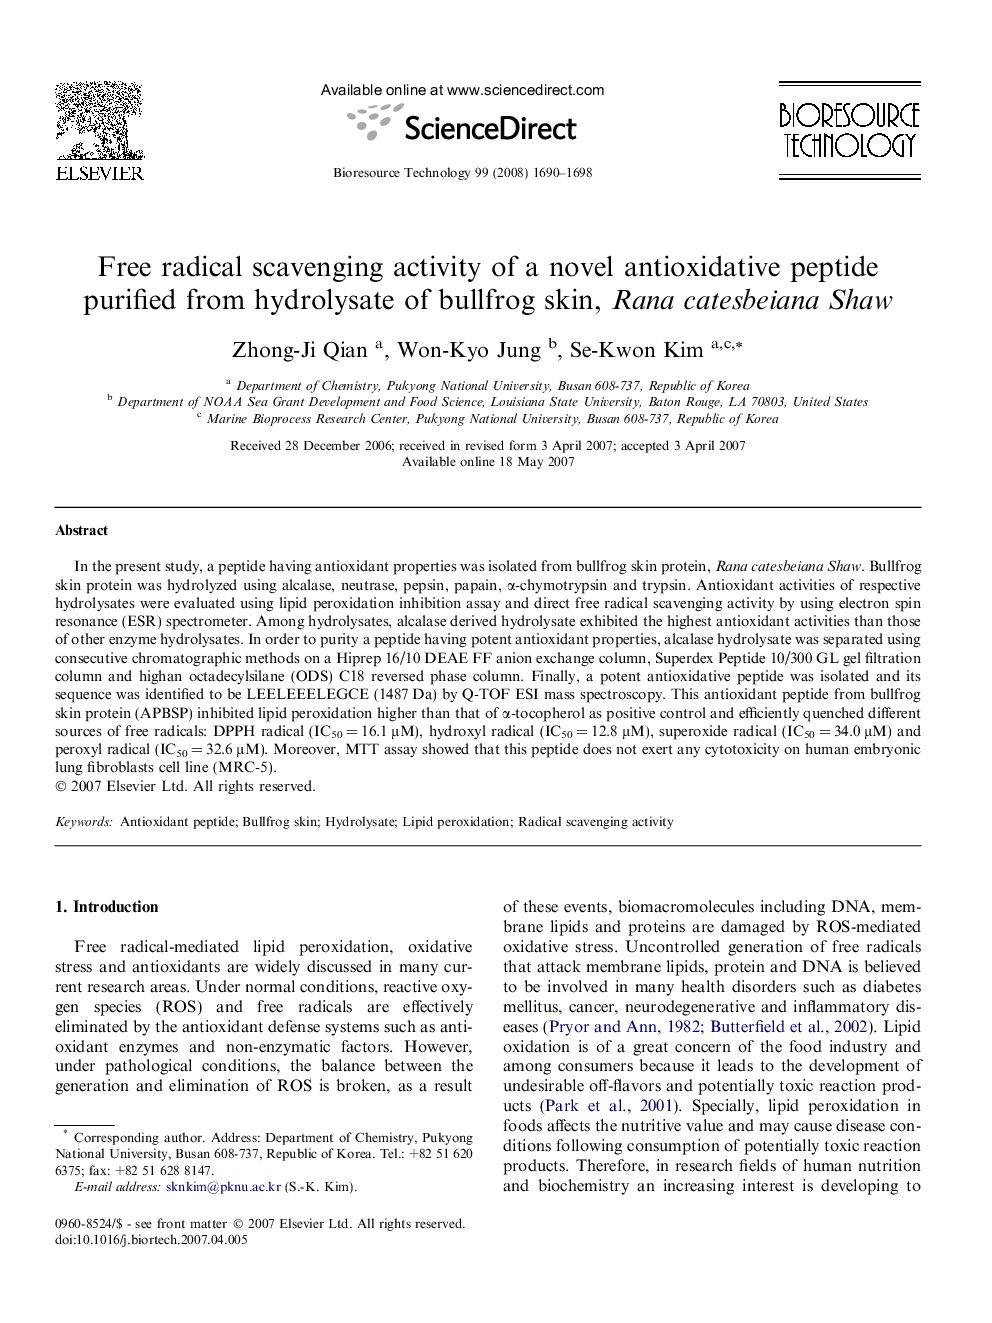 Free radical scavenging activity of a novel antioxidative peptide purified from hydrolysate of bullfrog skin, Rana catesbeiana Shaw